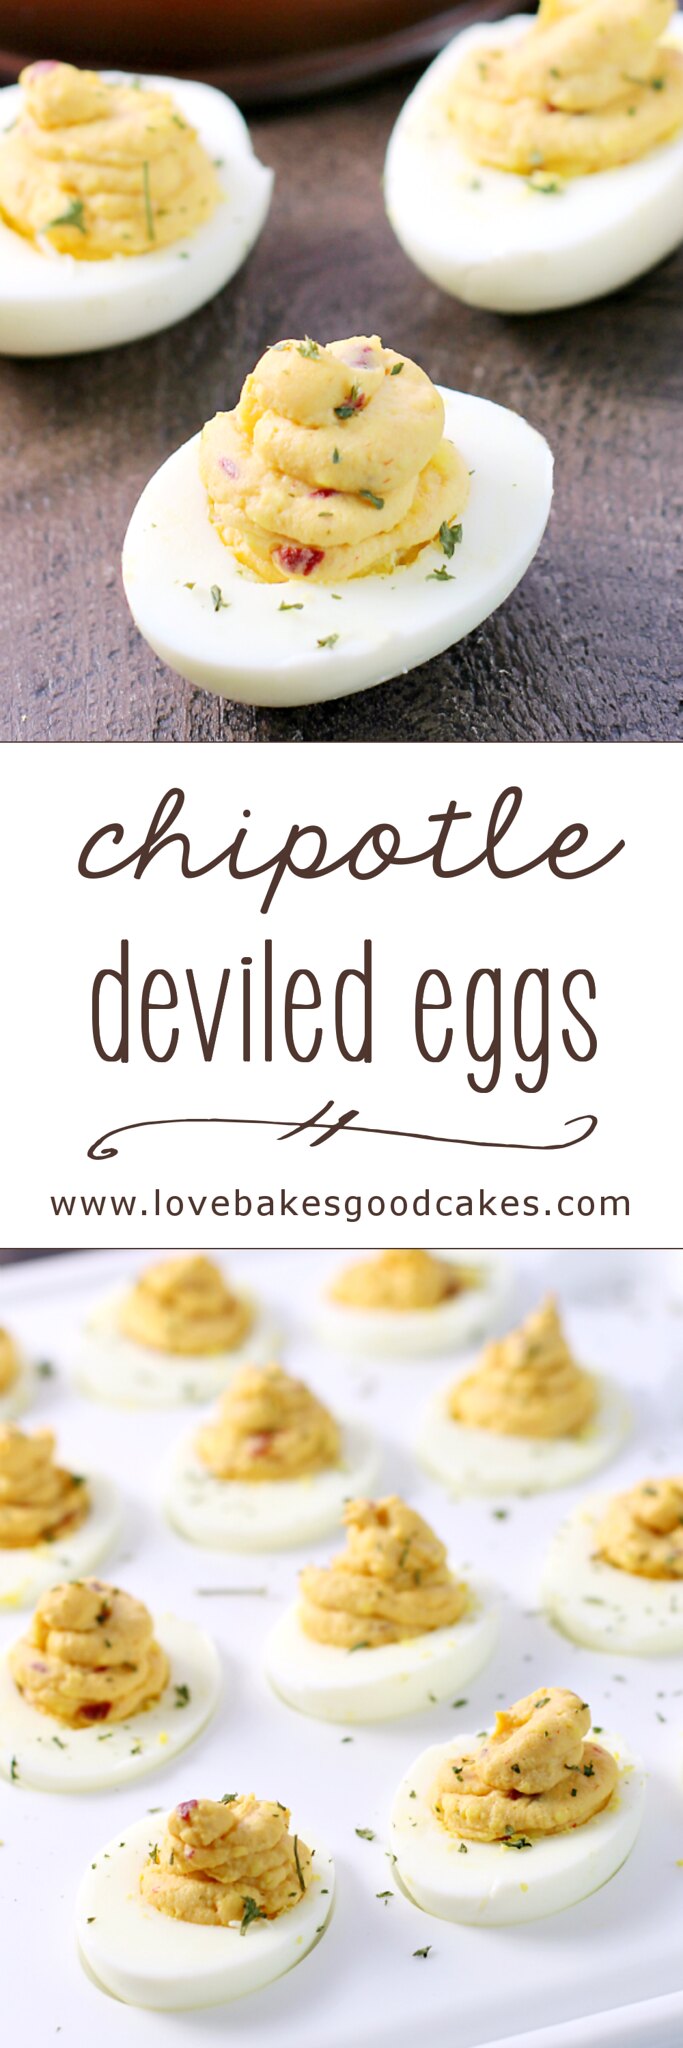 Chipotle Deviled Eggs collage.